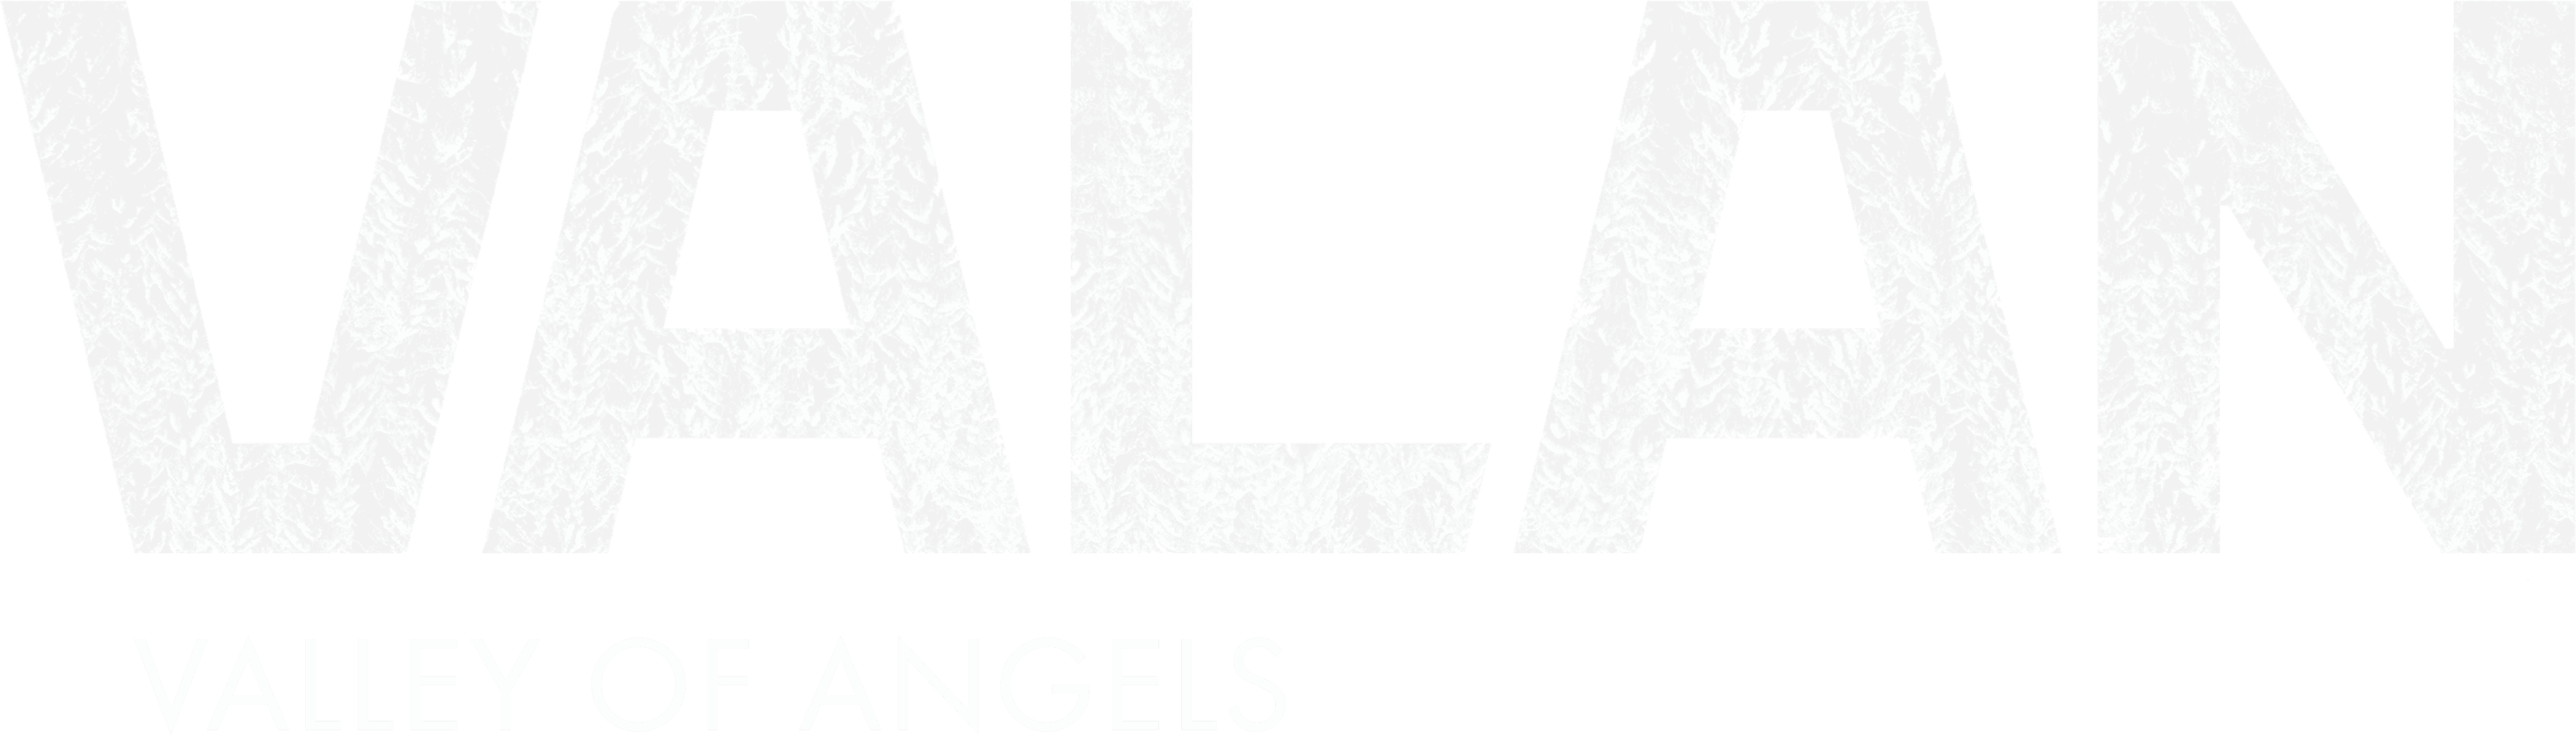 Valan: Valley of Angels logo